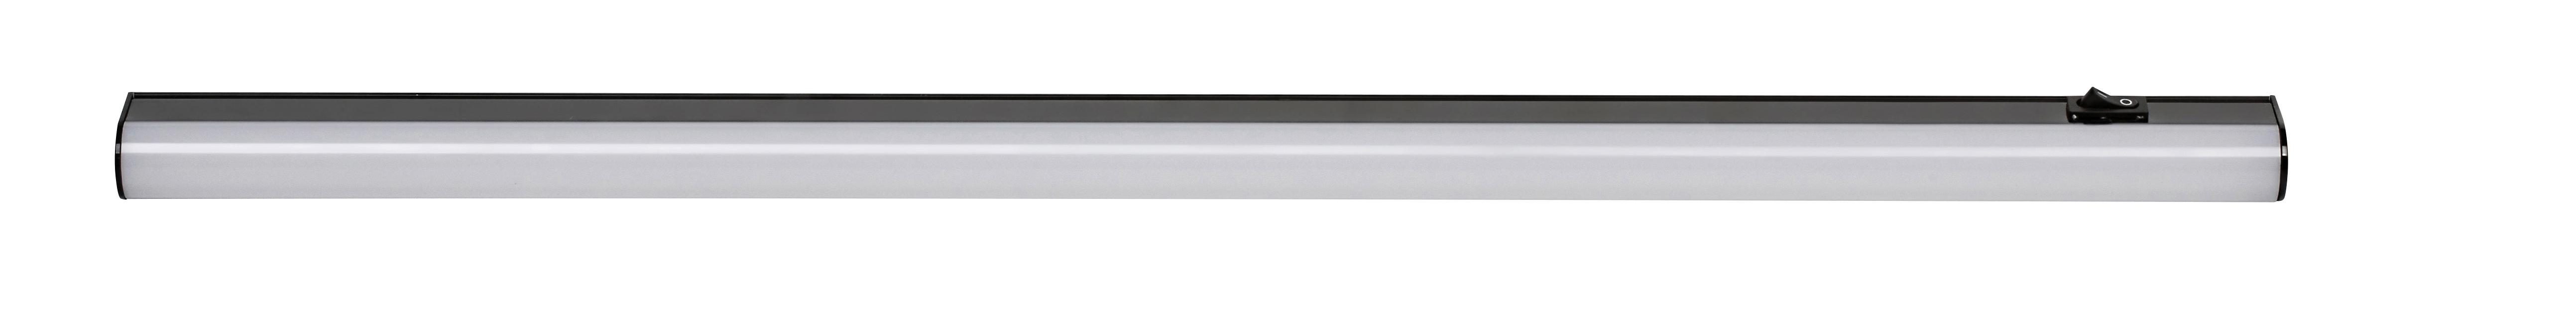 Pultmegvilágító Lámpa Greg 59cm - Basics, Műanyag (59/2/3cm) - Rabalux